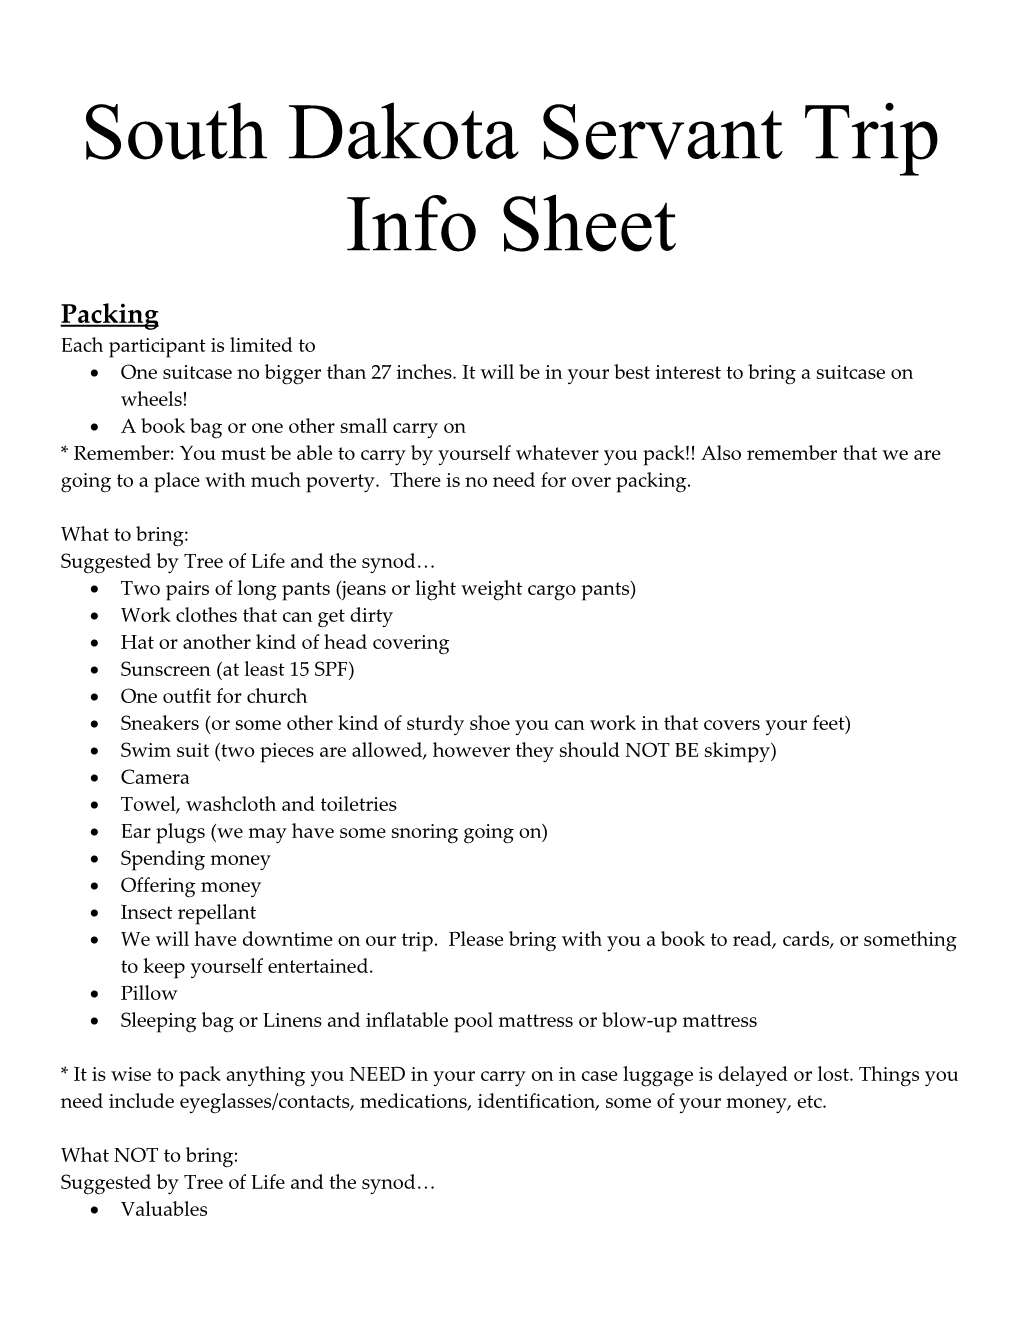 South Dakota Info Sheet